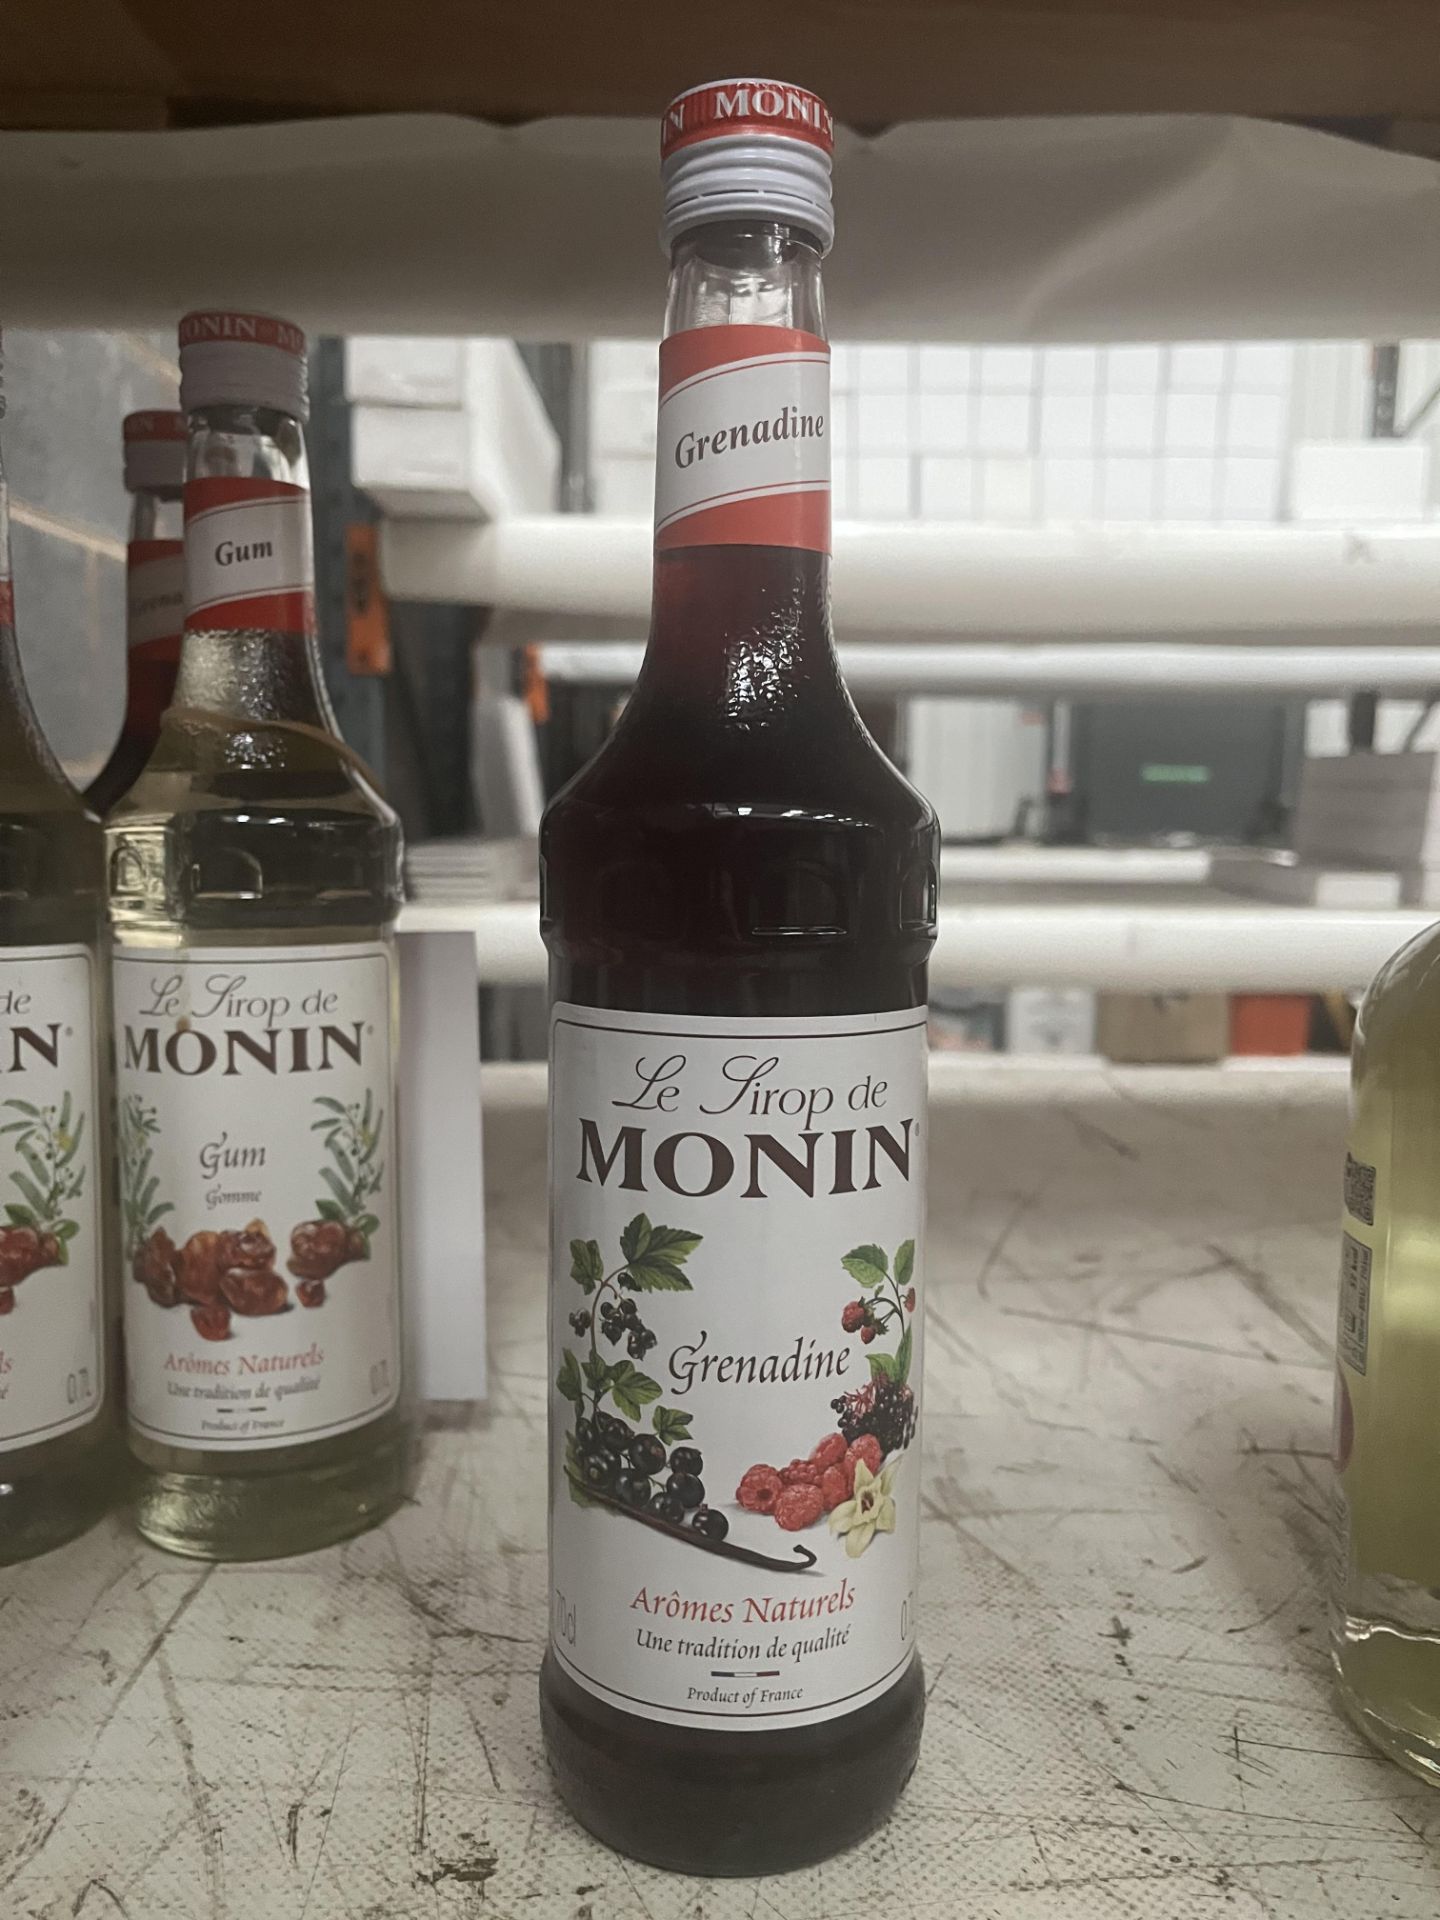 14 x Bottles of Le Sirop de Monin - 9 x 'Gum' and 5 x 'Grenadine' 70cl - Image 3 of 7